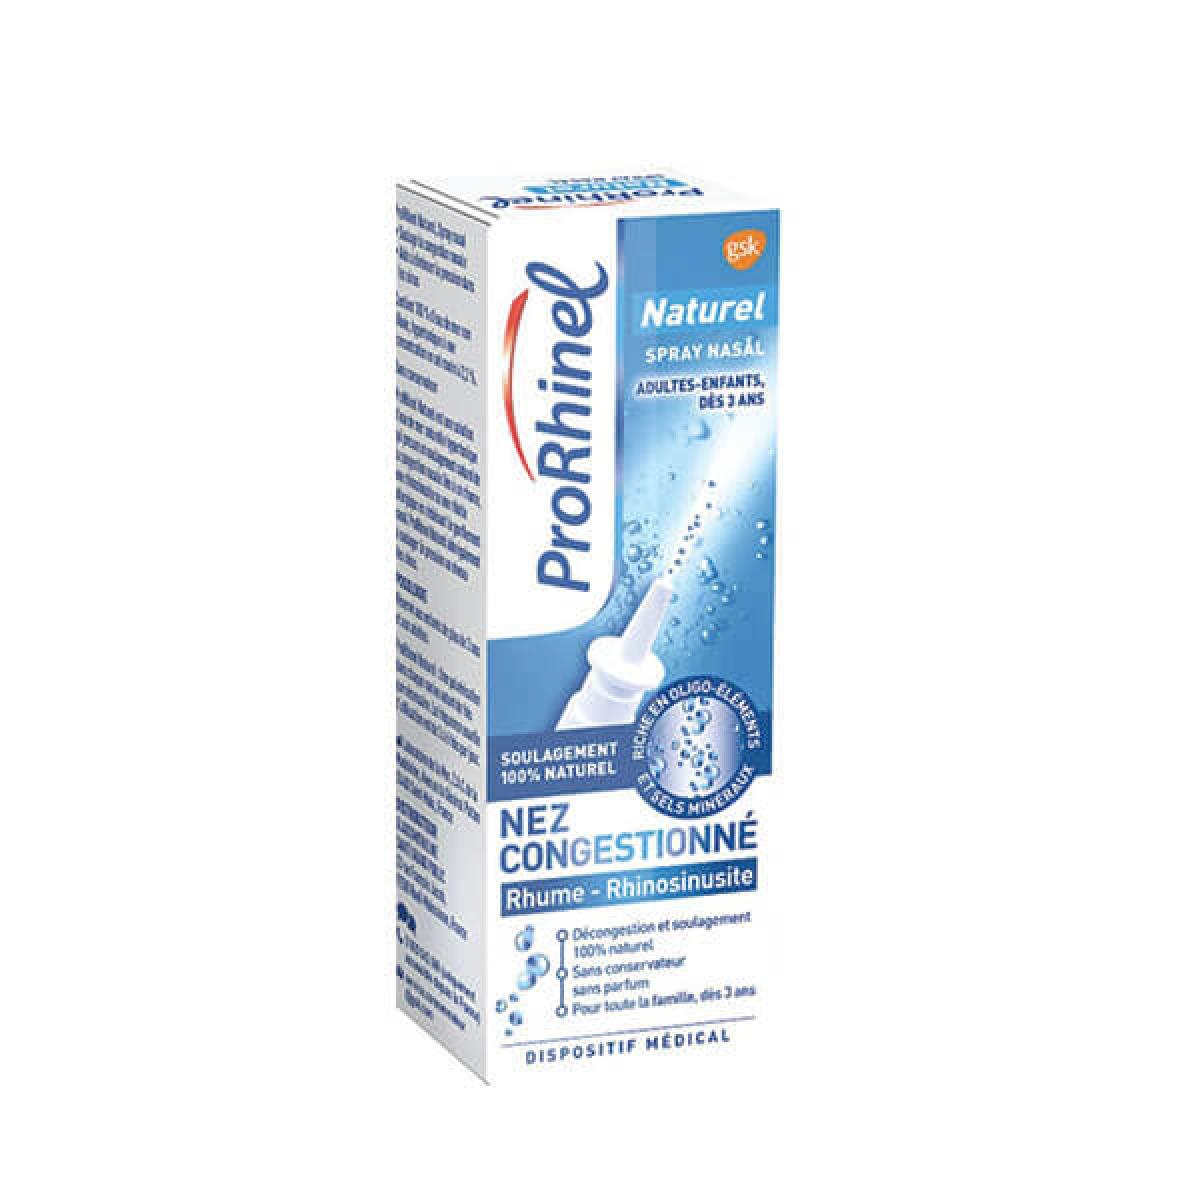 Prorhinel Extra Eucalyptus Spray Nasal - 20 ml